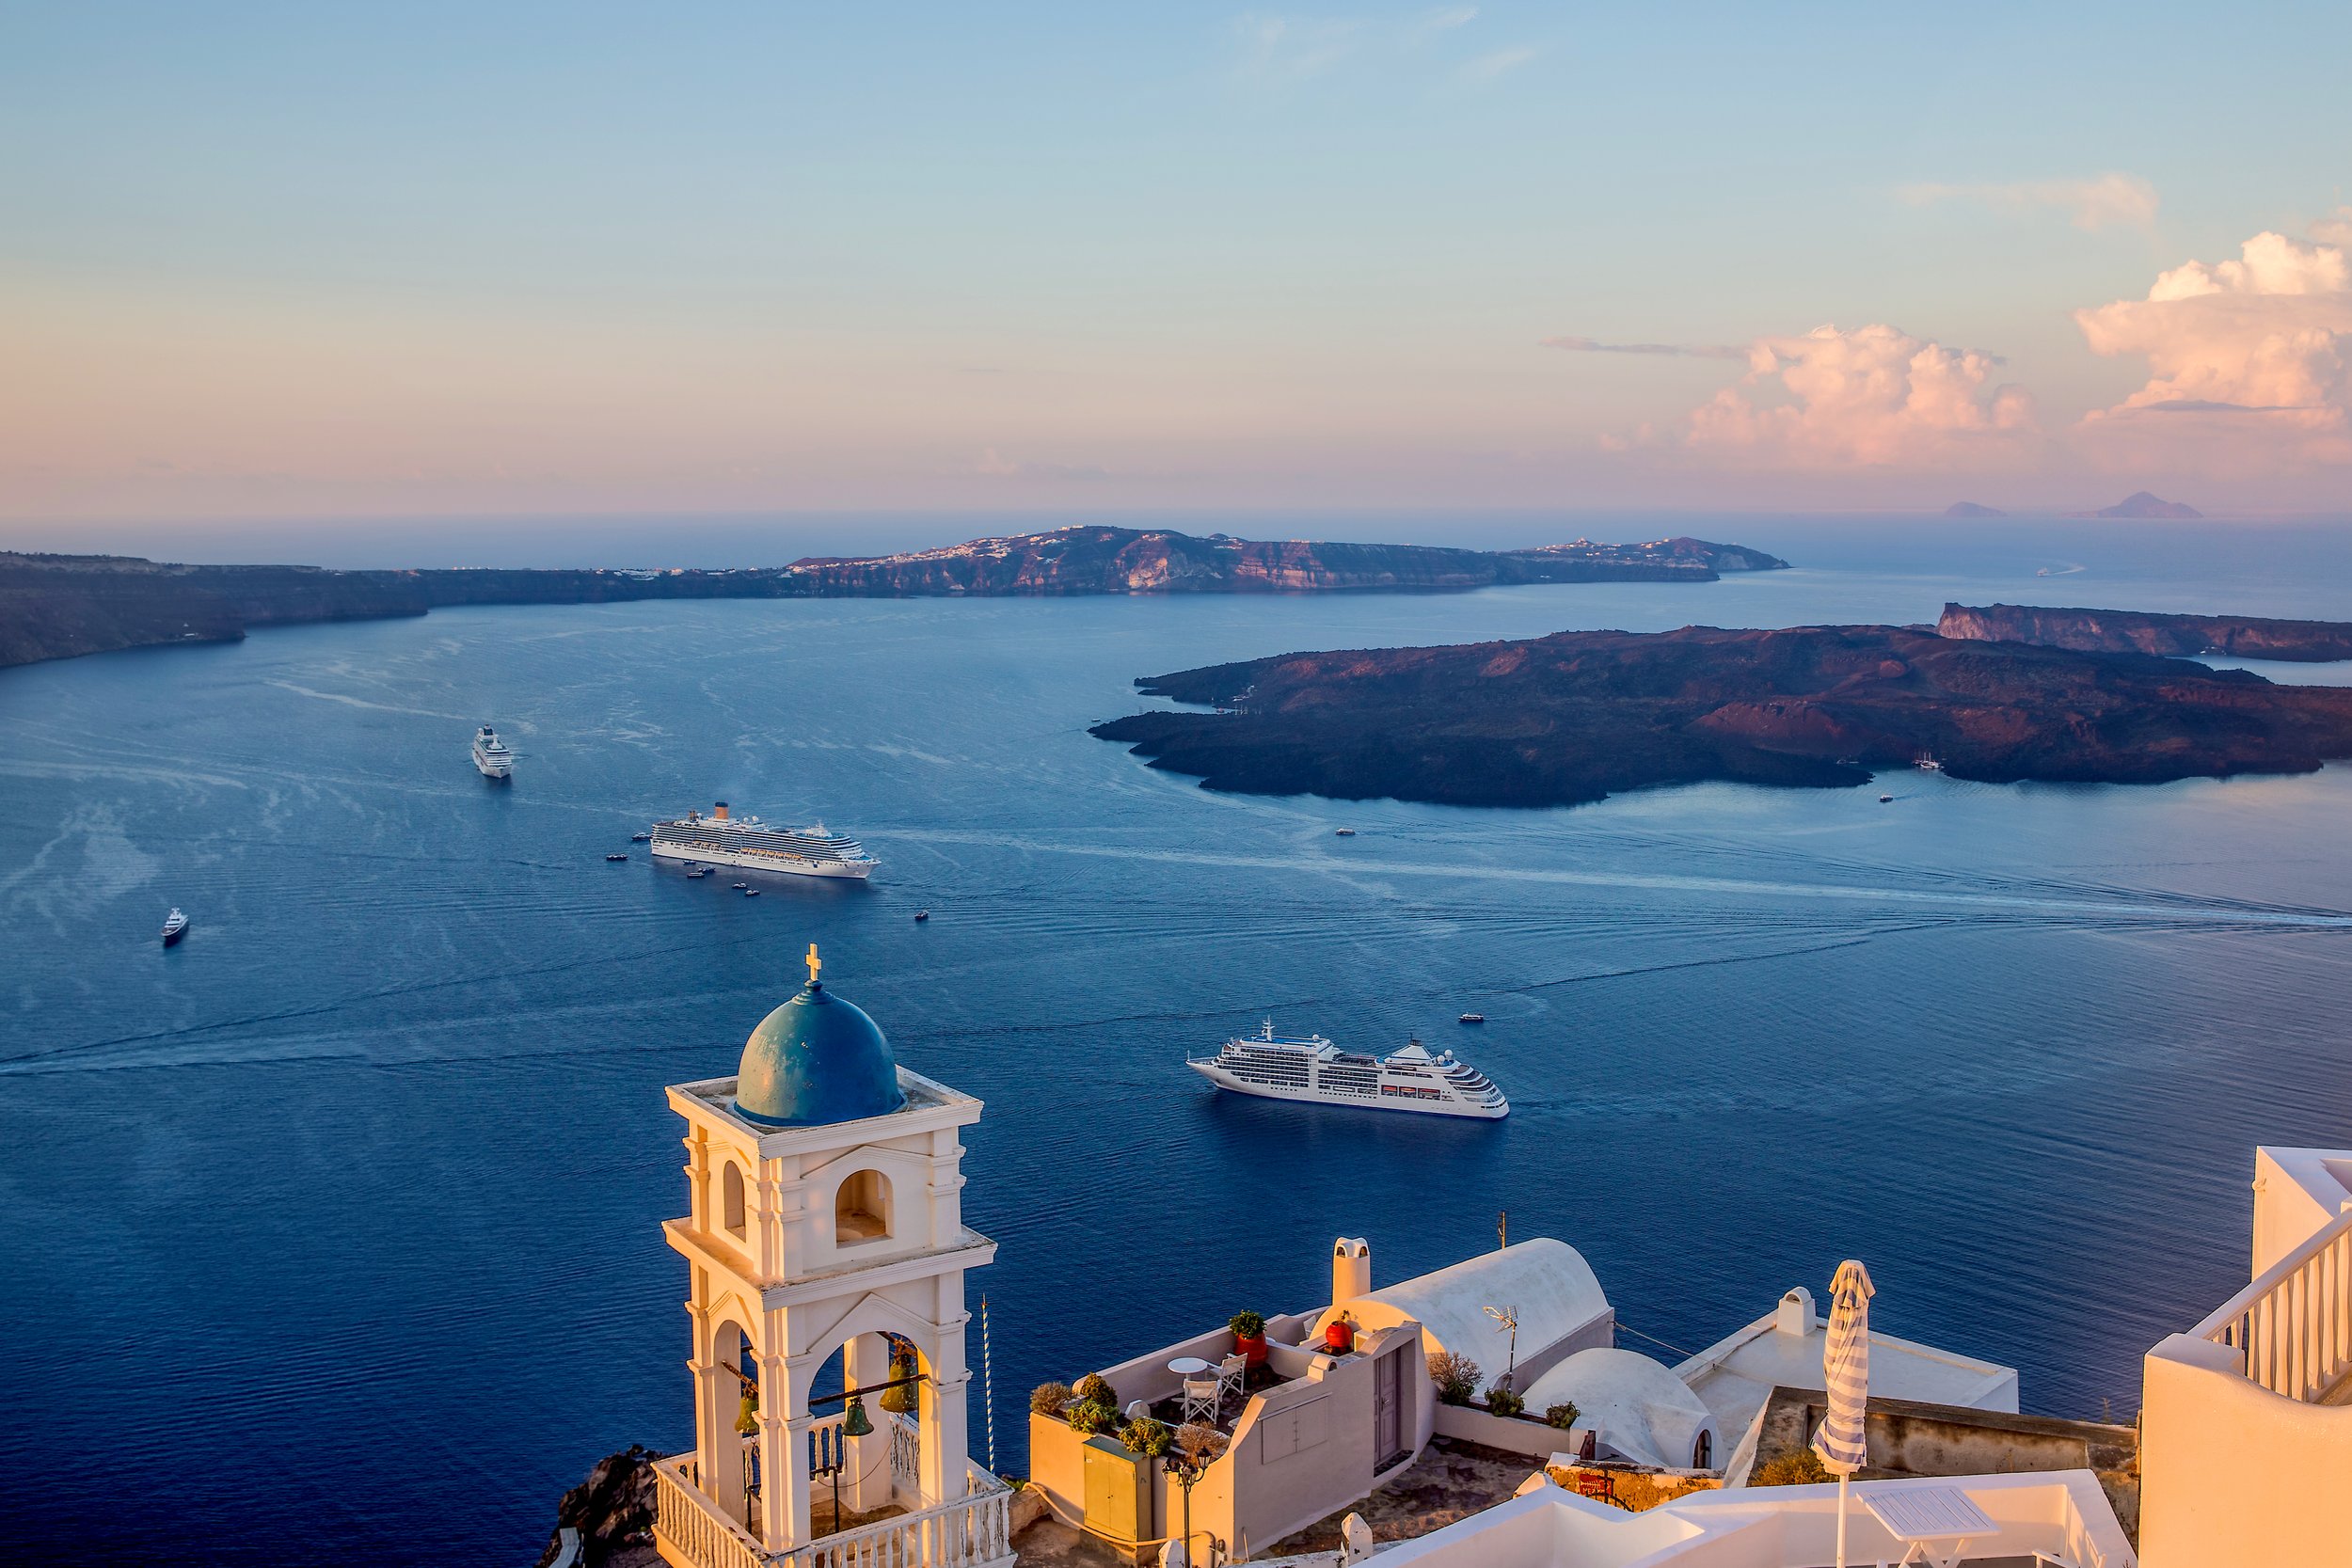 10 day greek island cruise